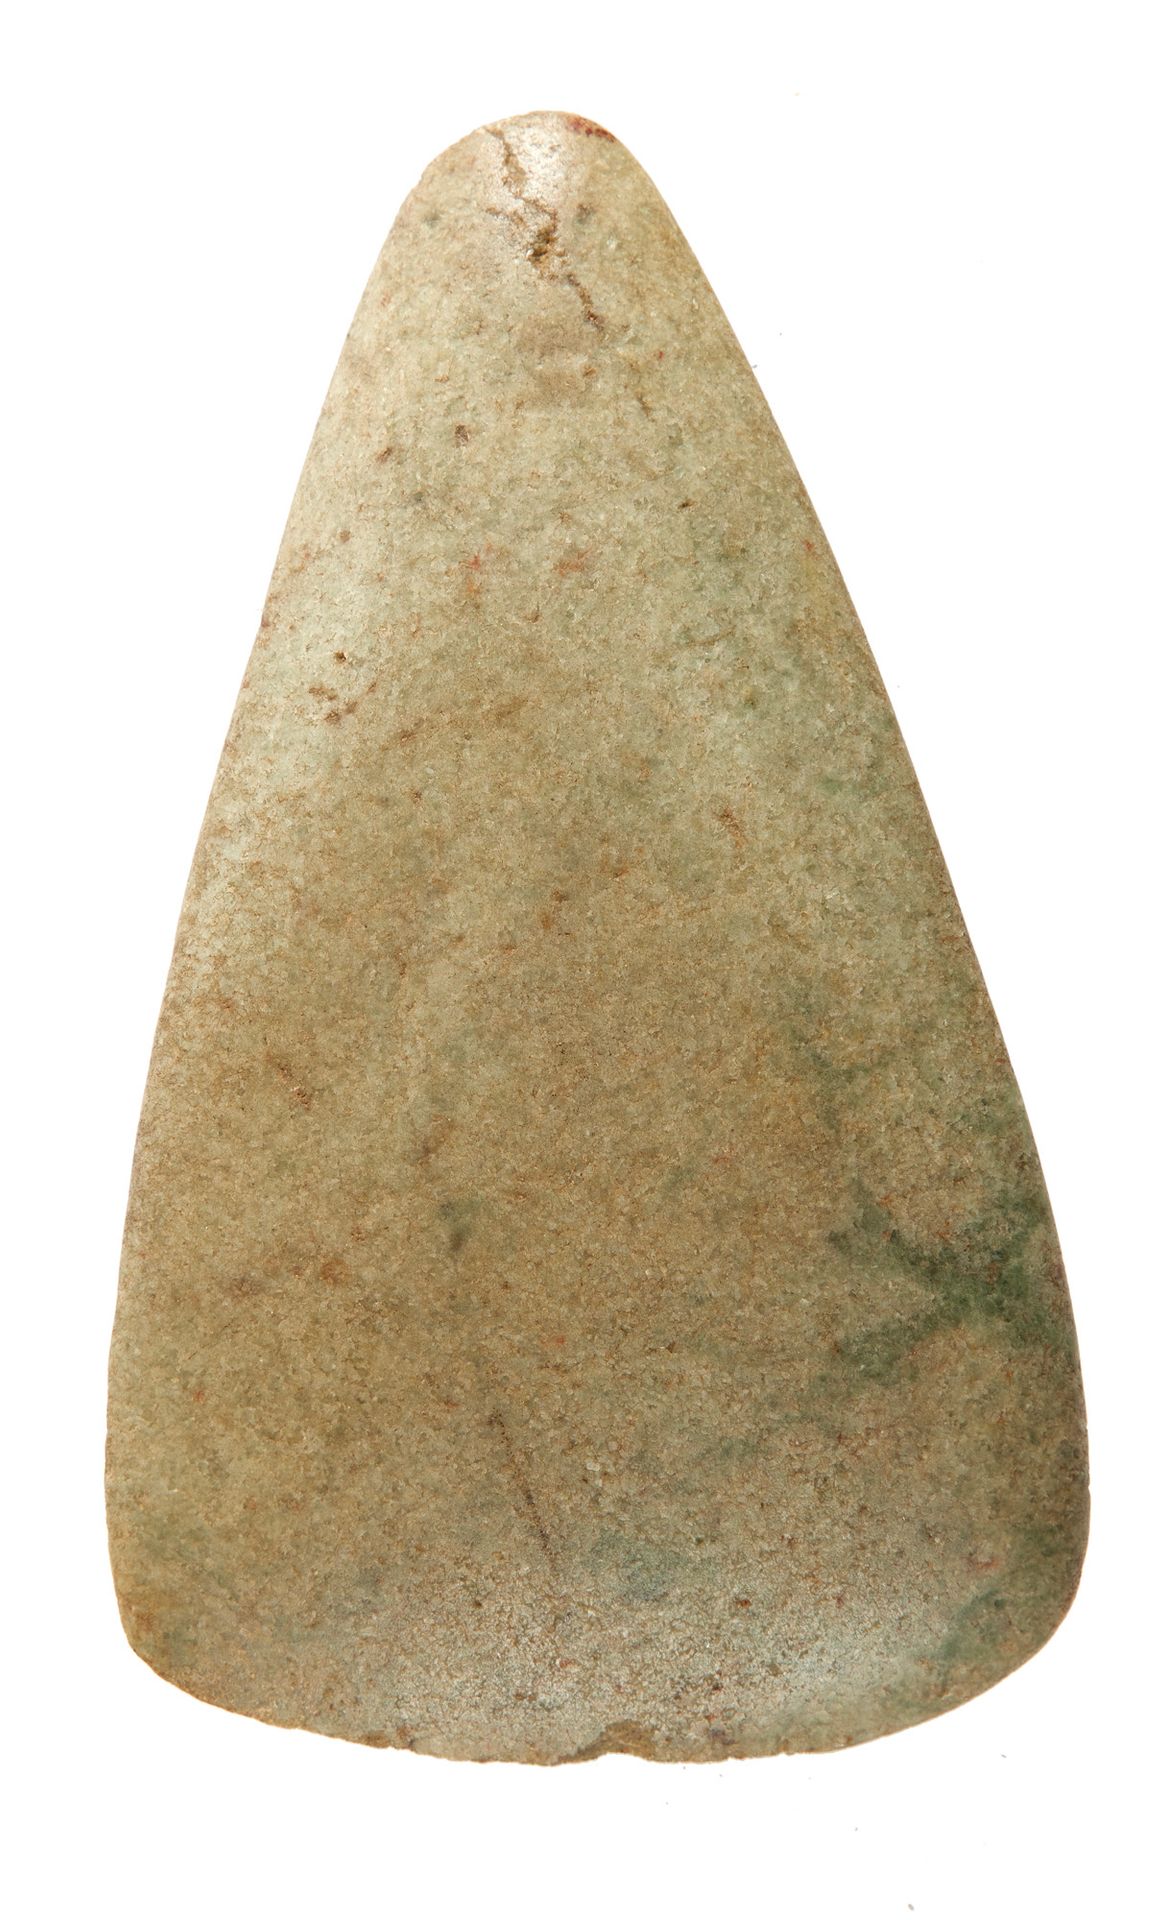 Herminette triangulaire polie. 抛光的三角锛。

绿色翡翠，边缘有小缺口。

法国，布列塔尼，新石器时代晚期。

长：14厘米

&hellip;